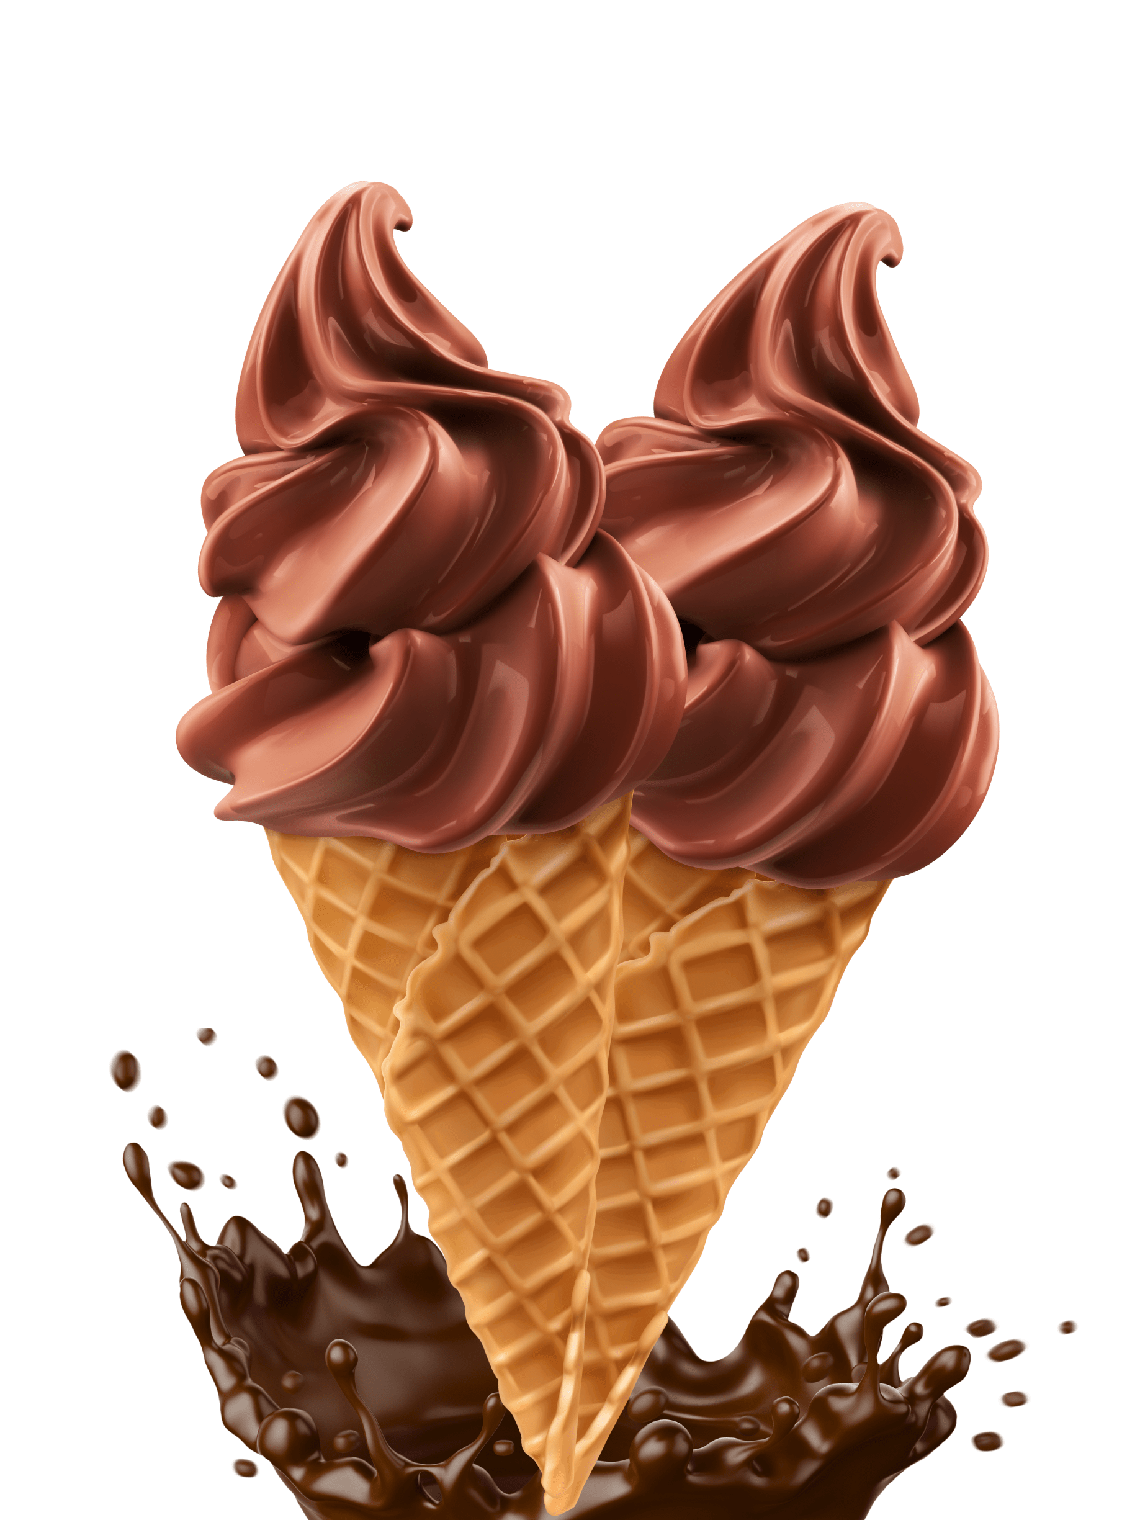 Soft Serve Ice Cream Chocolate